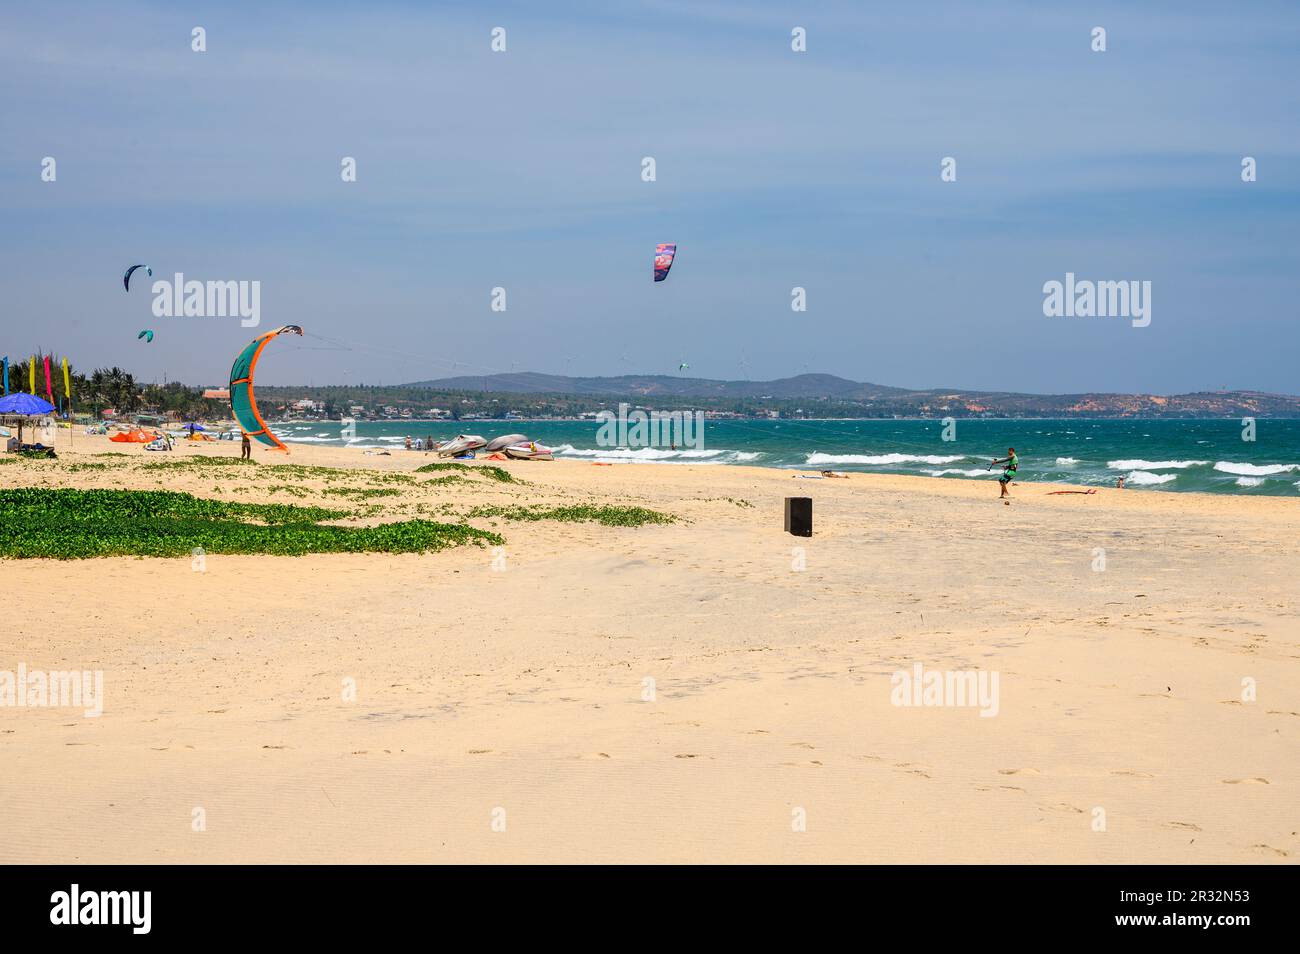 Kitesurfers in action on and off the fine, sandy beach in Mui Ne, Vietnam. Stock Photo